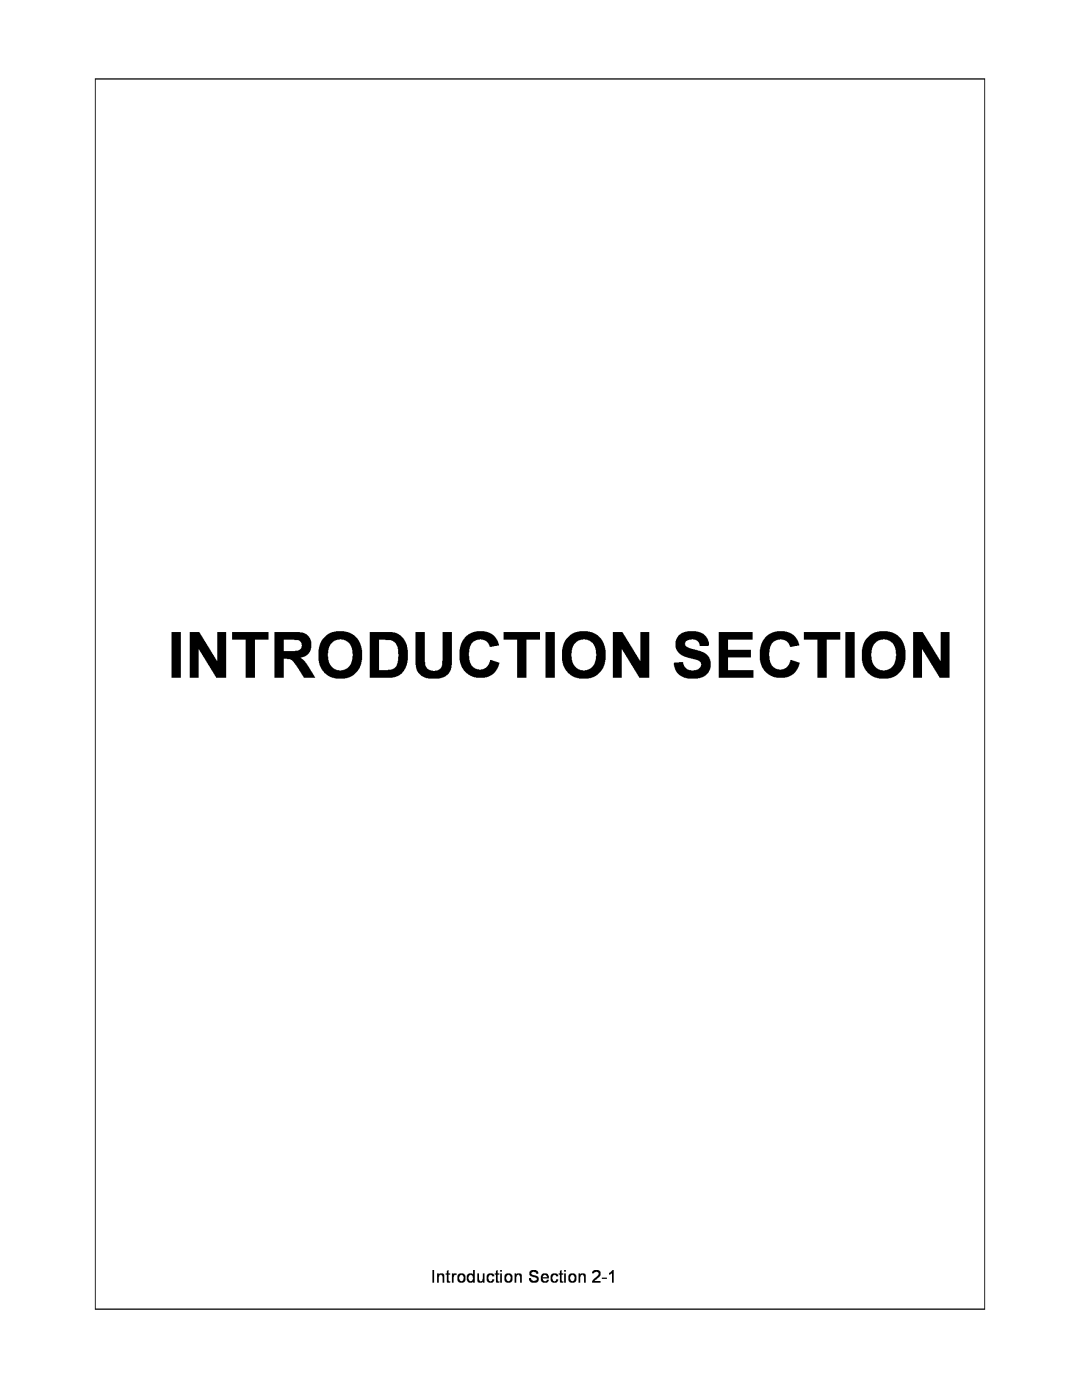 Alamo 1595 manual Introduction Section 